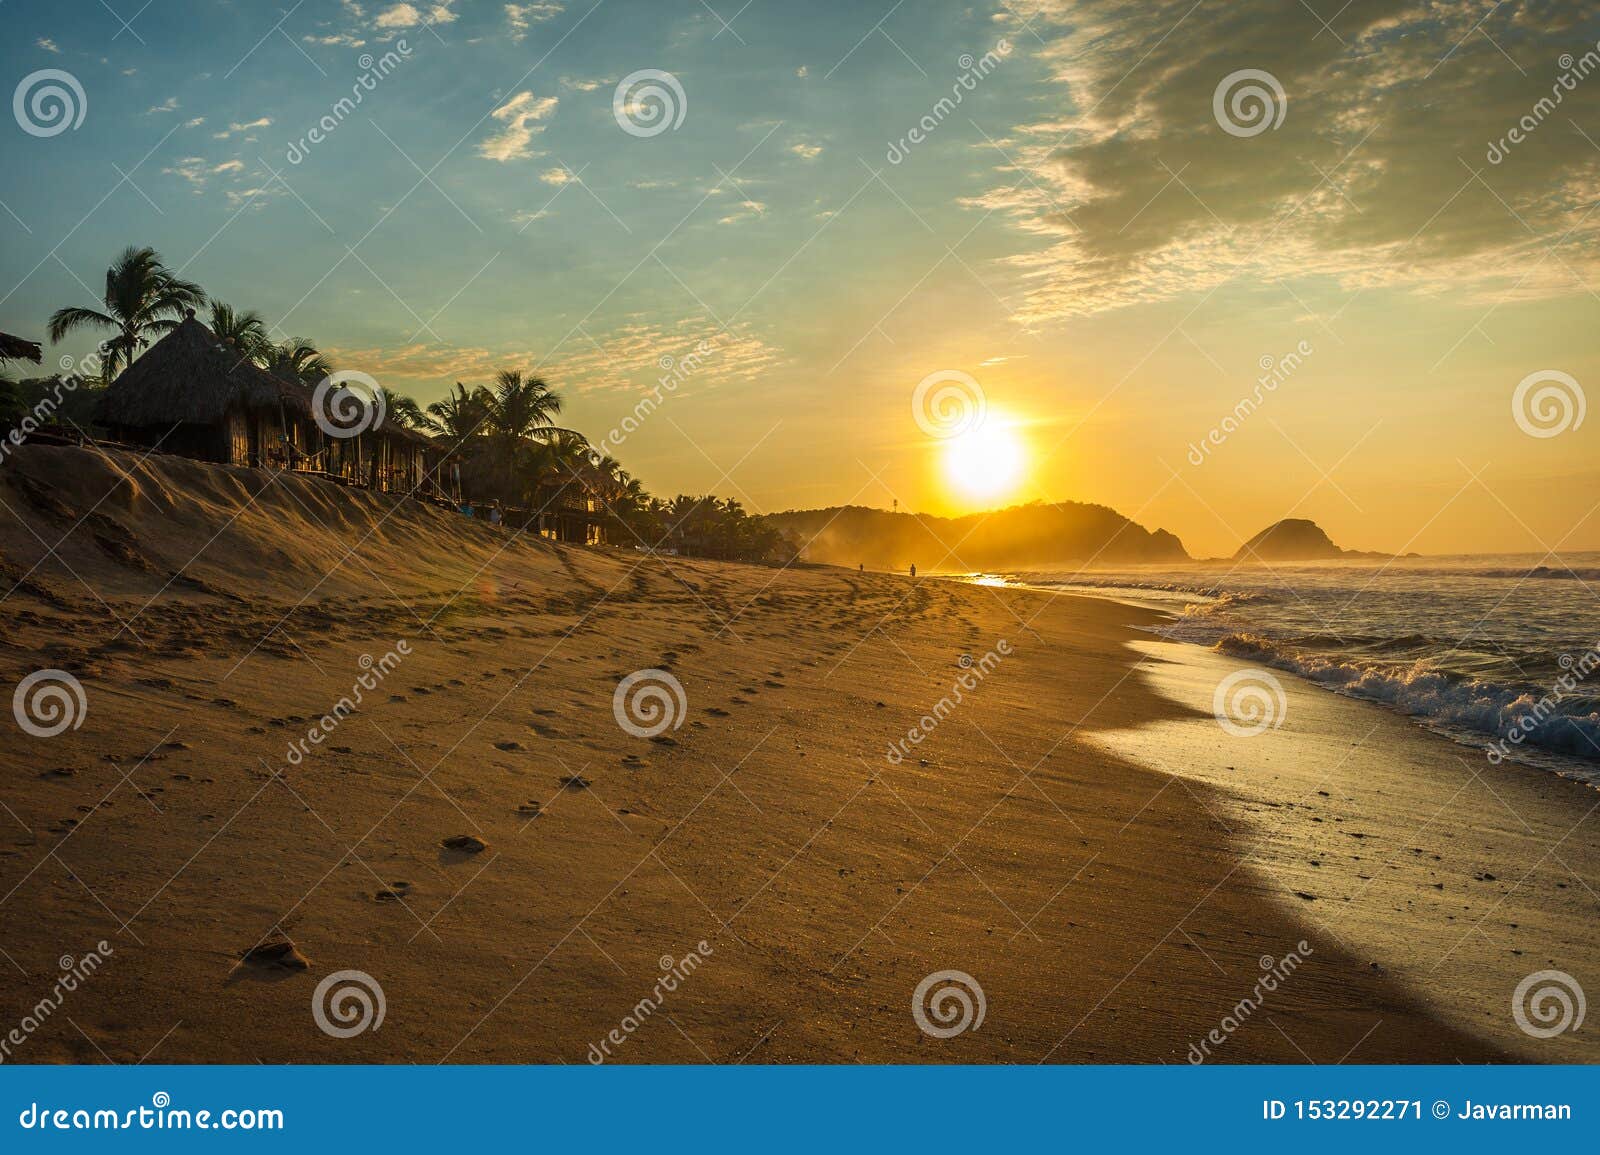 zipolite beach at sunrise, pacific coast of mexico